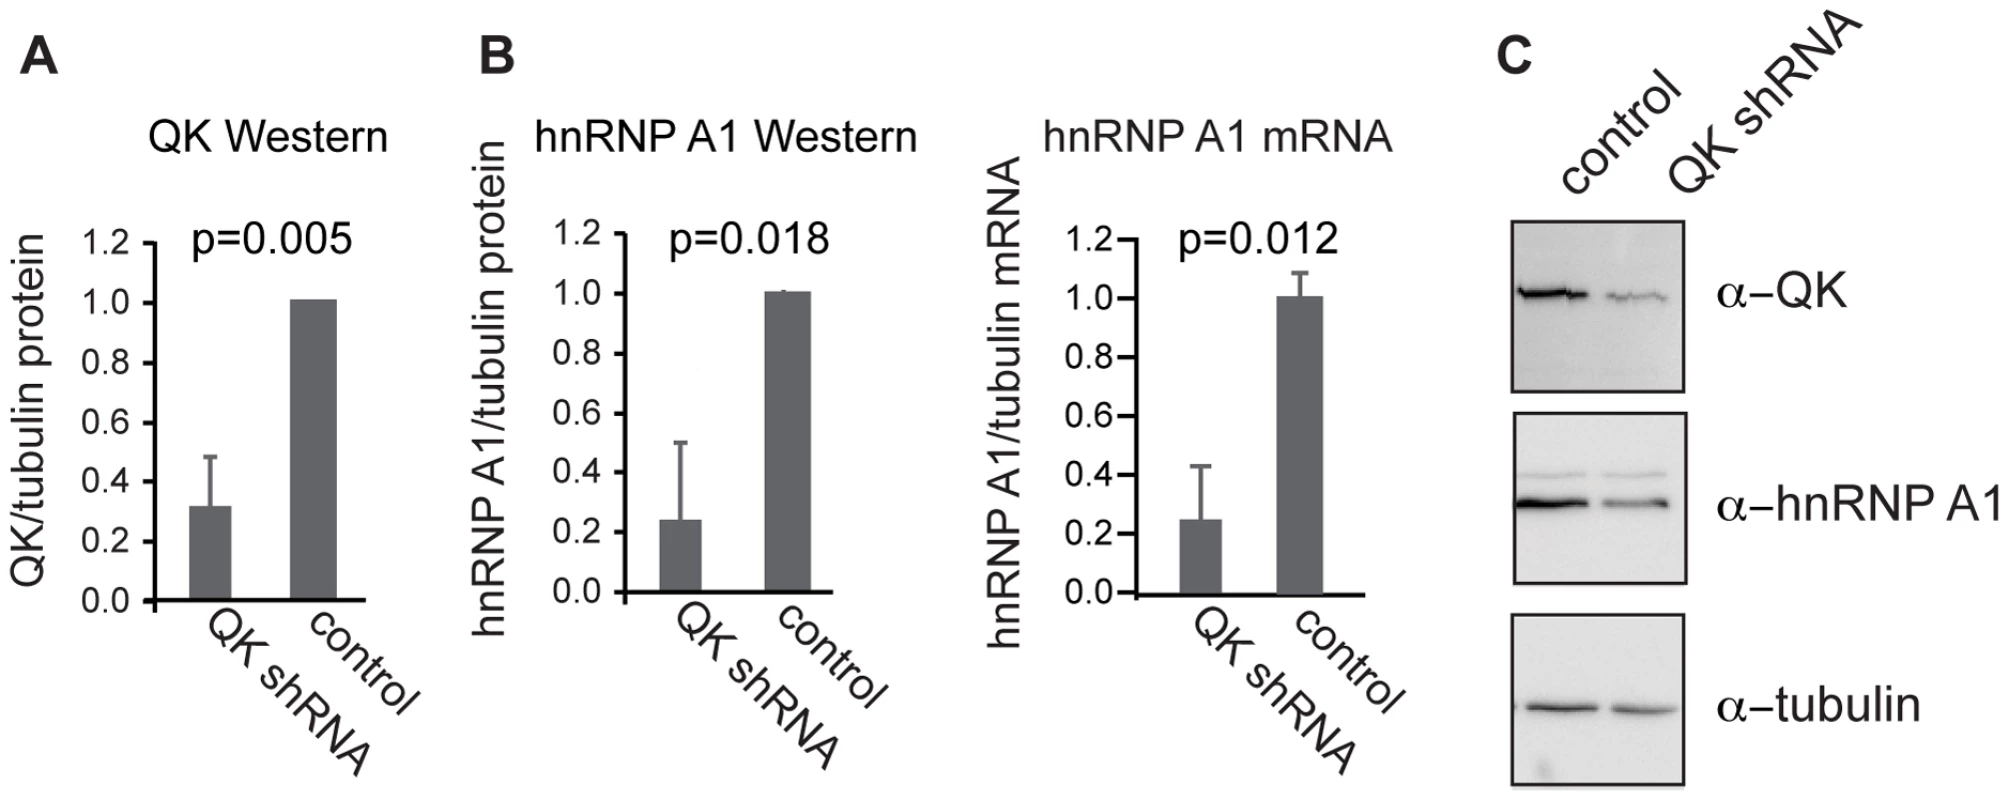 QK regulates expression of endogenous <i>Hnrnpa1</i>.